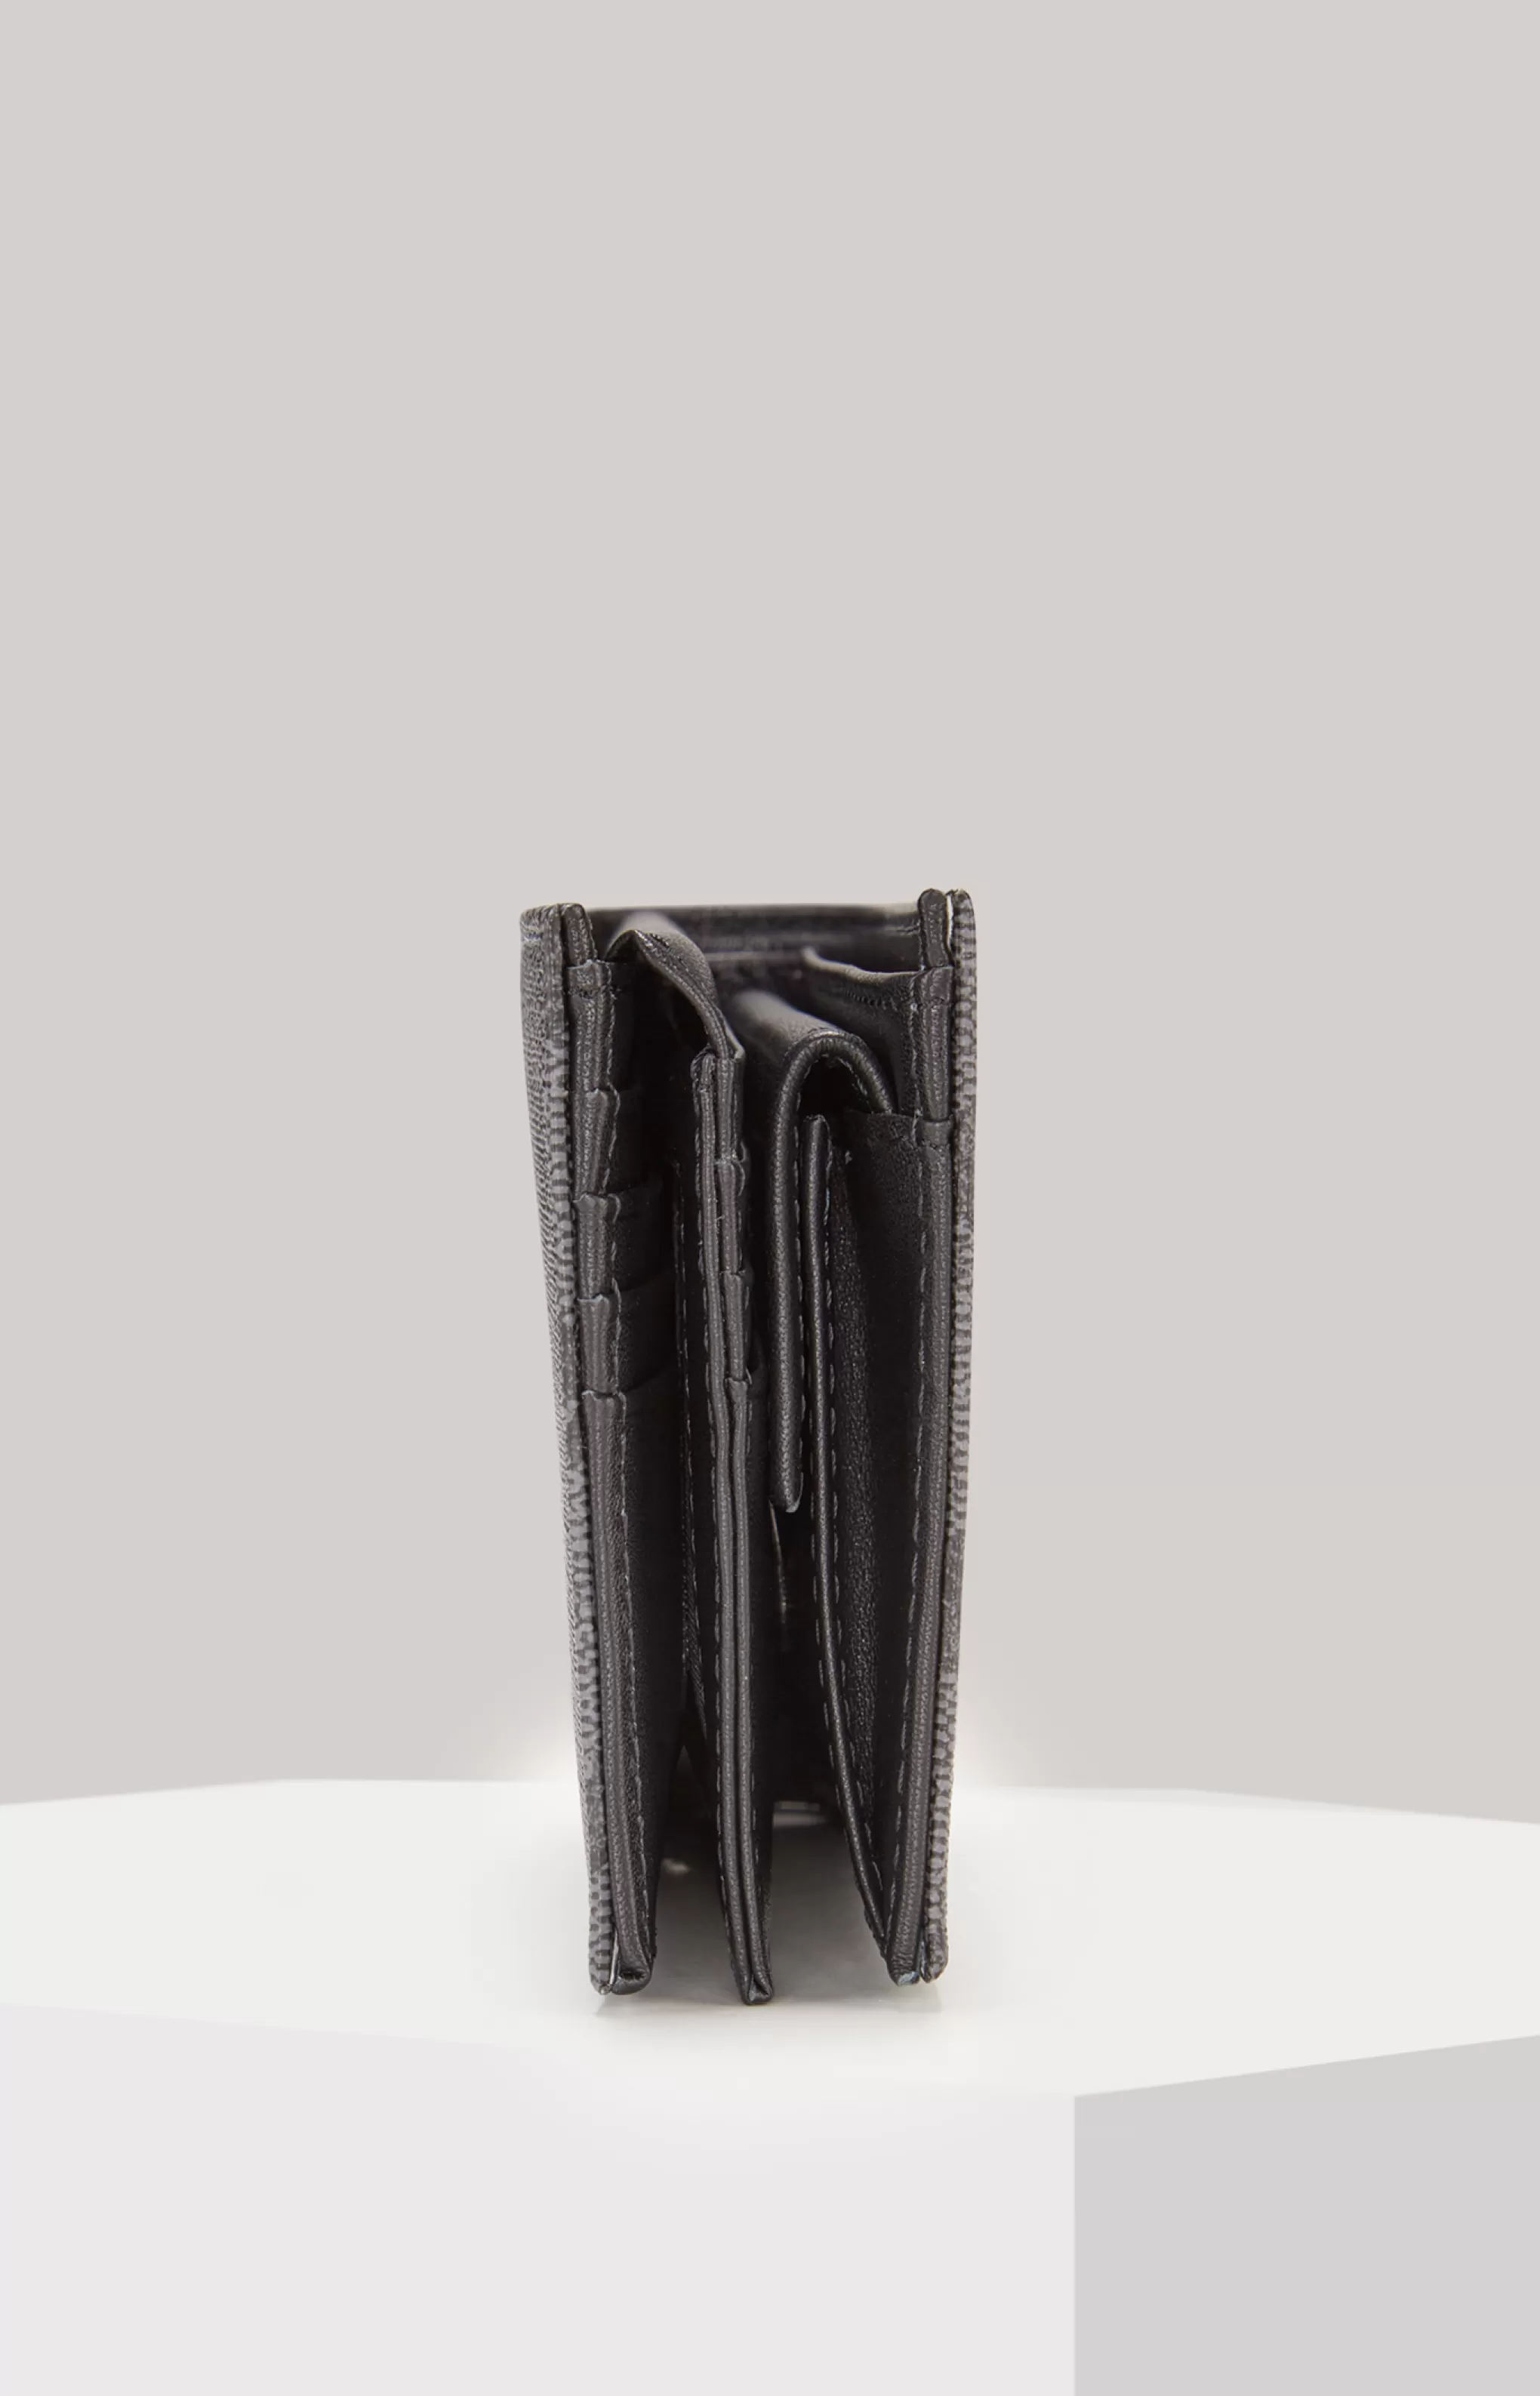 Small Leather Goods*JOOP Small Leather Goods Mazzolino Typhon Wallet in Grey/Black